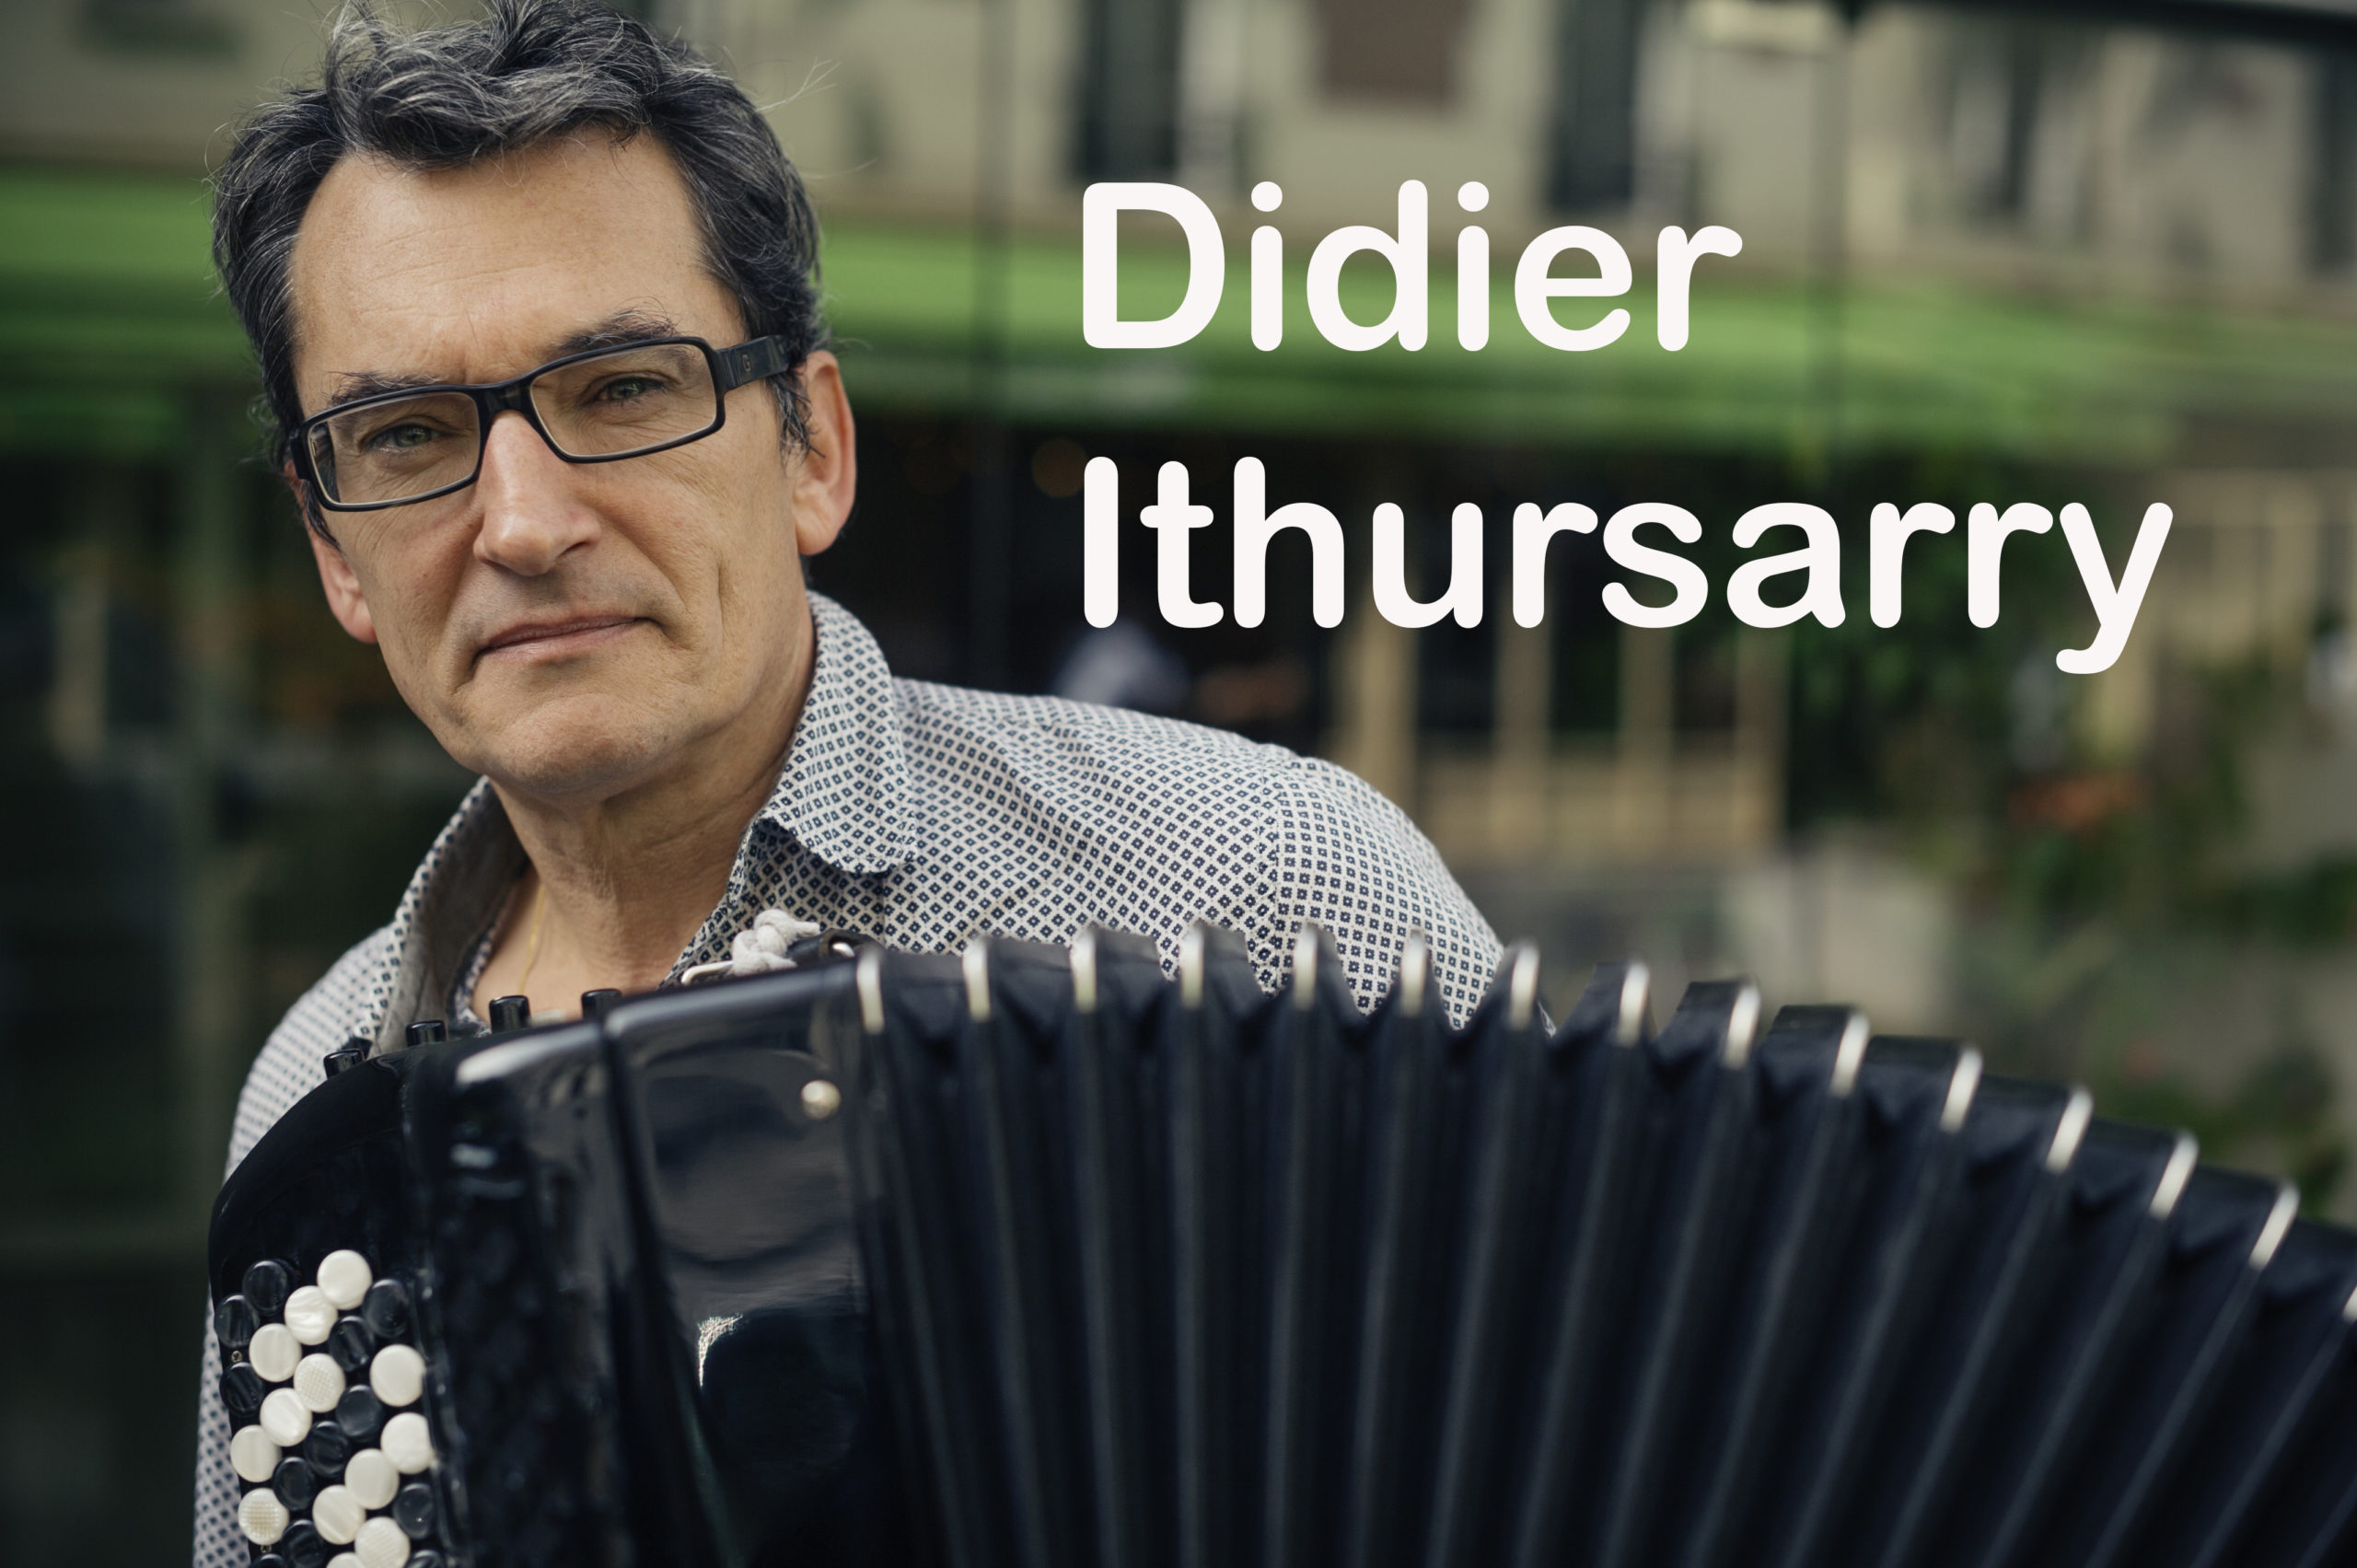 Didier Ithursarry